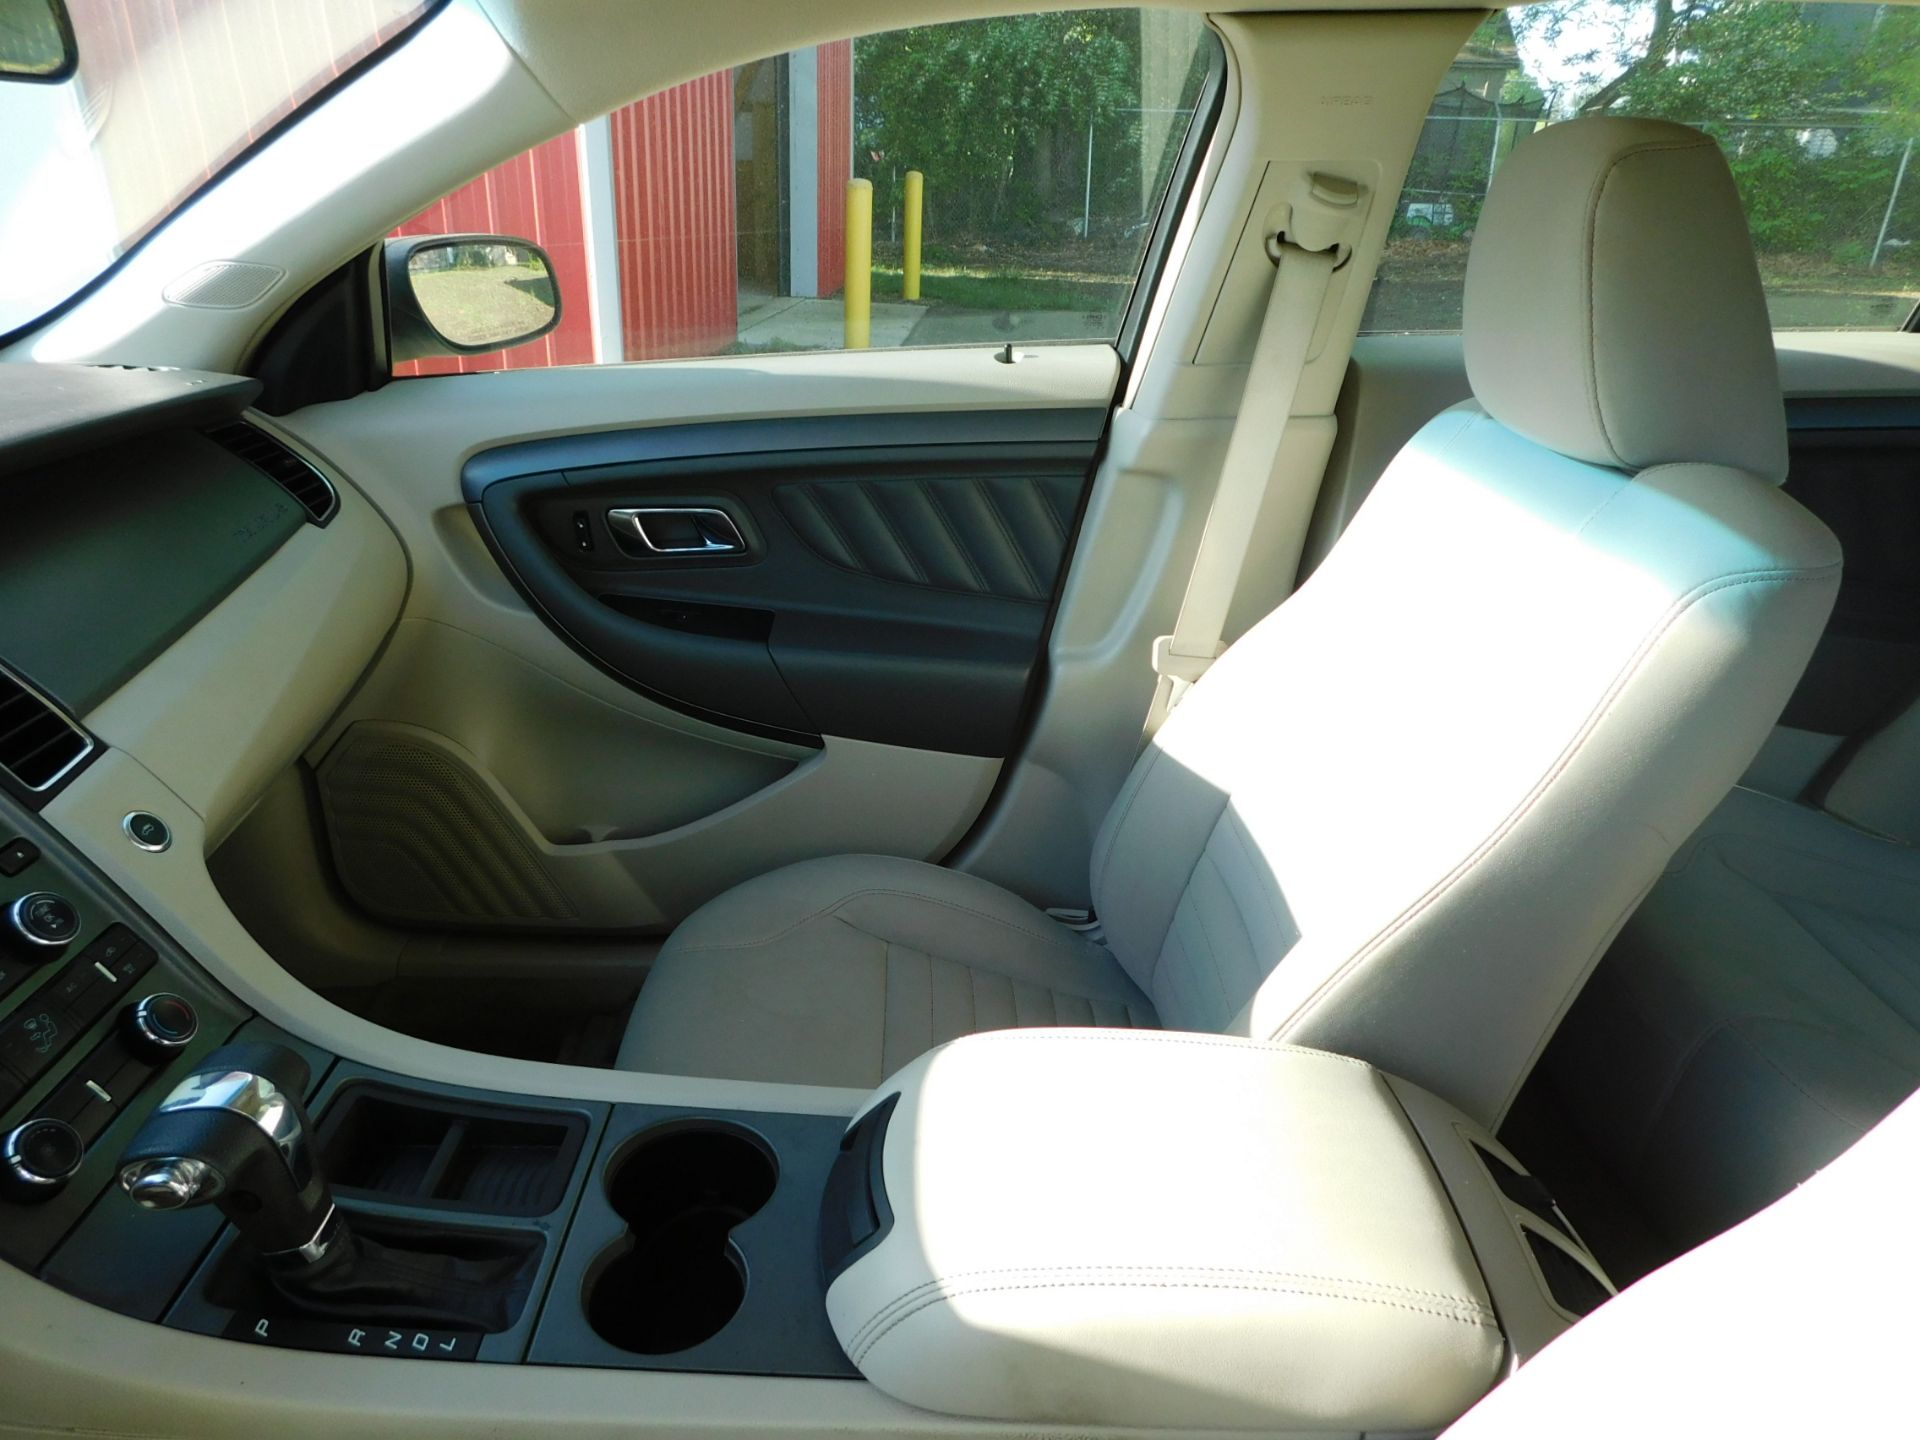 2011 Ford Taurus 4-Door Sedan vin 1FAHP20WXBG16330, Automatic Transmission, PW,PL, AC, Cloth - Image 28 of 41